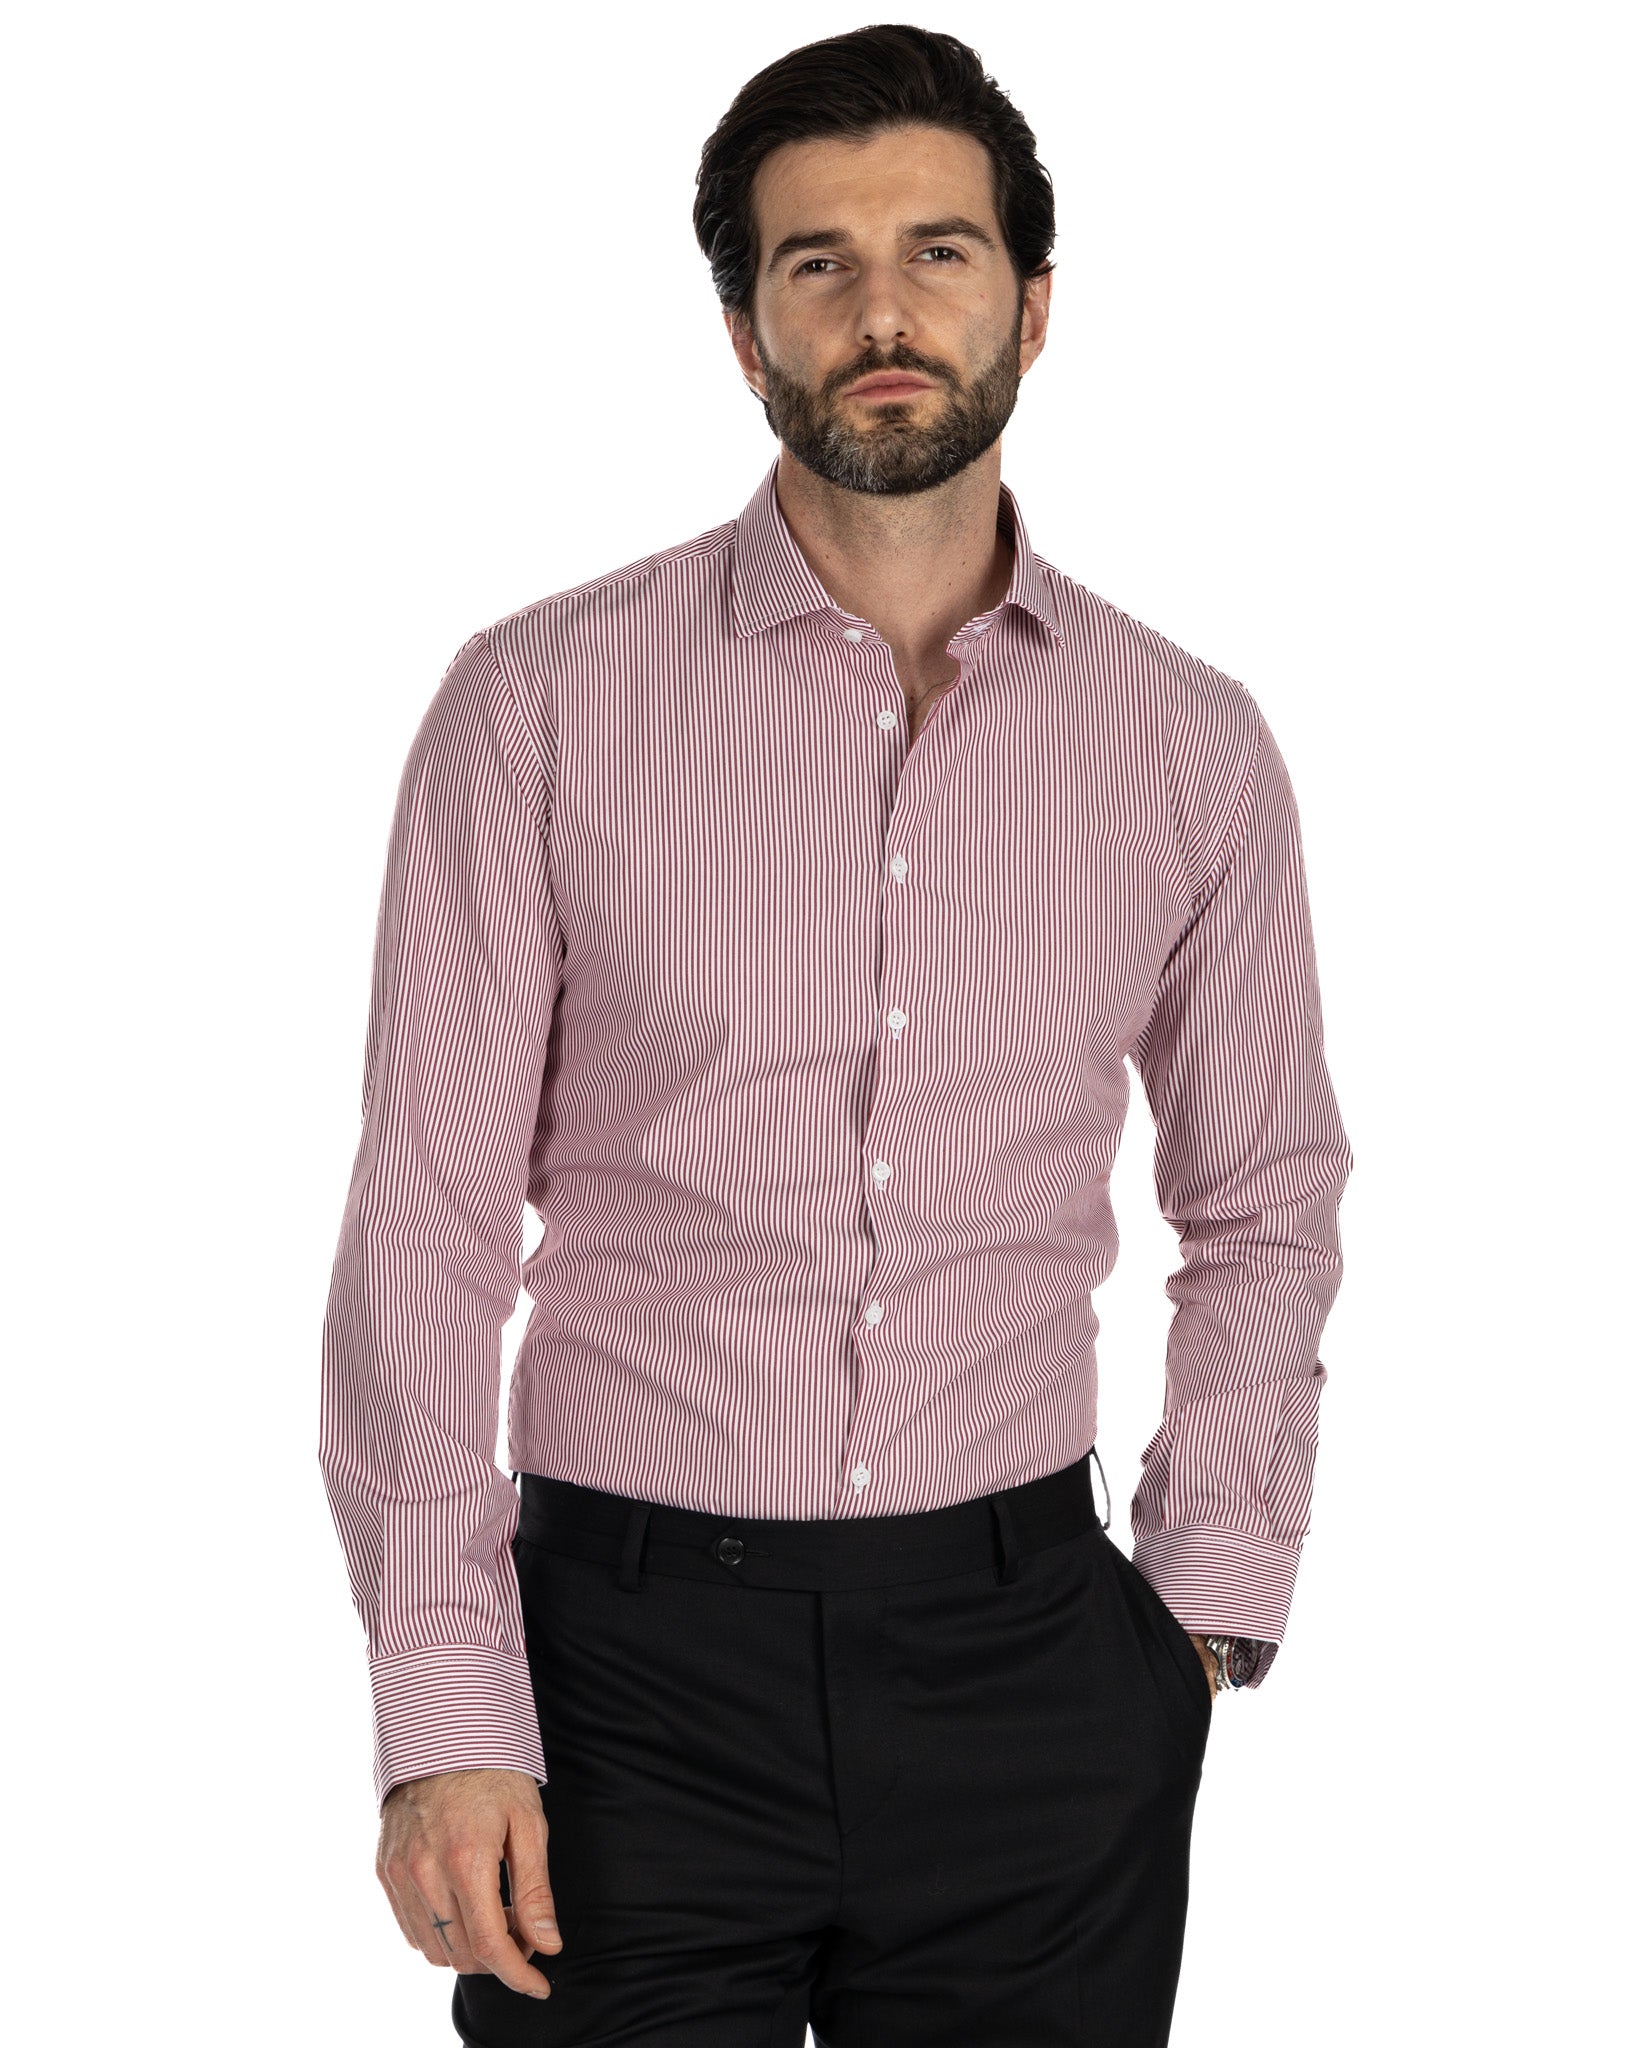 Shirt - slim fit narrow stripe burgundy